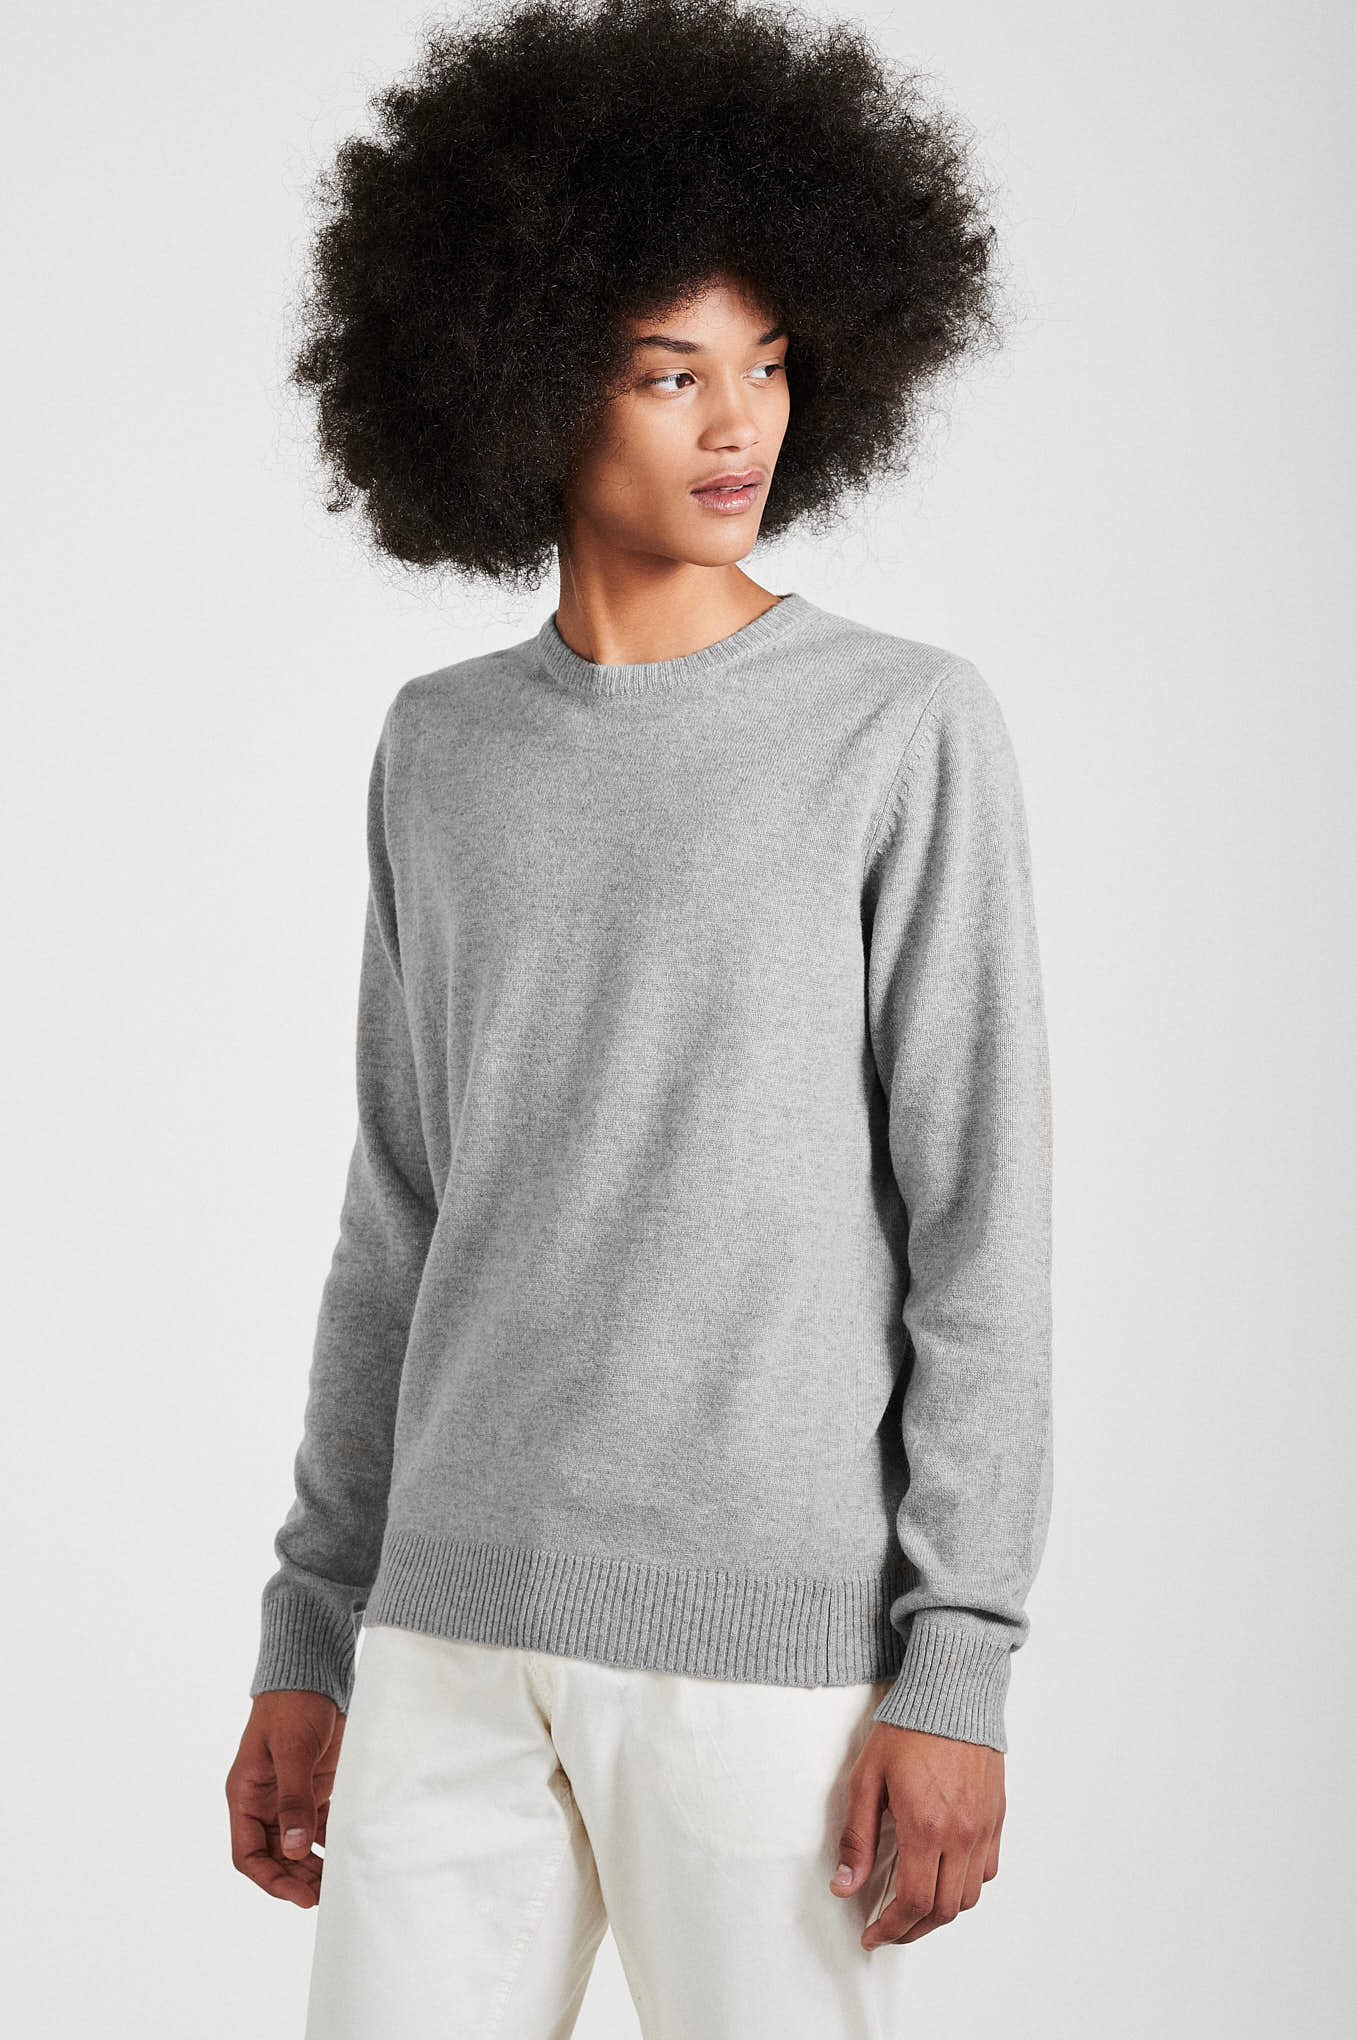 Sweater Mix Grey Sport Man